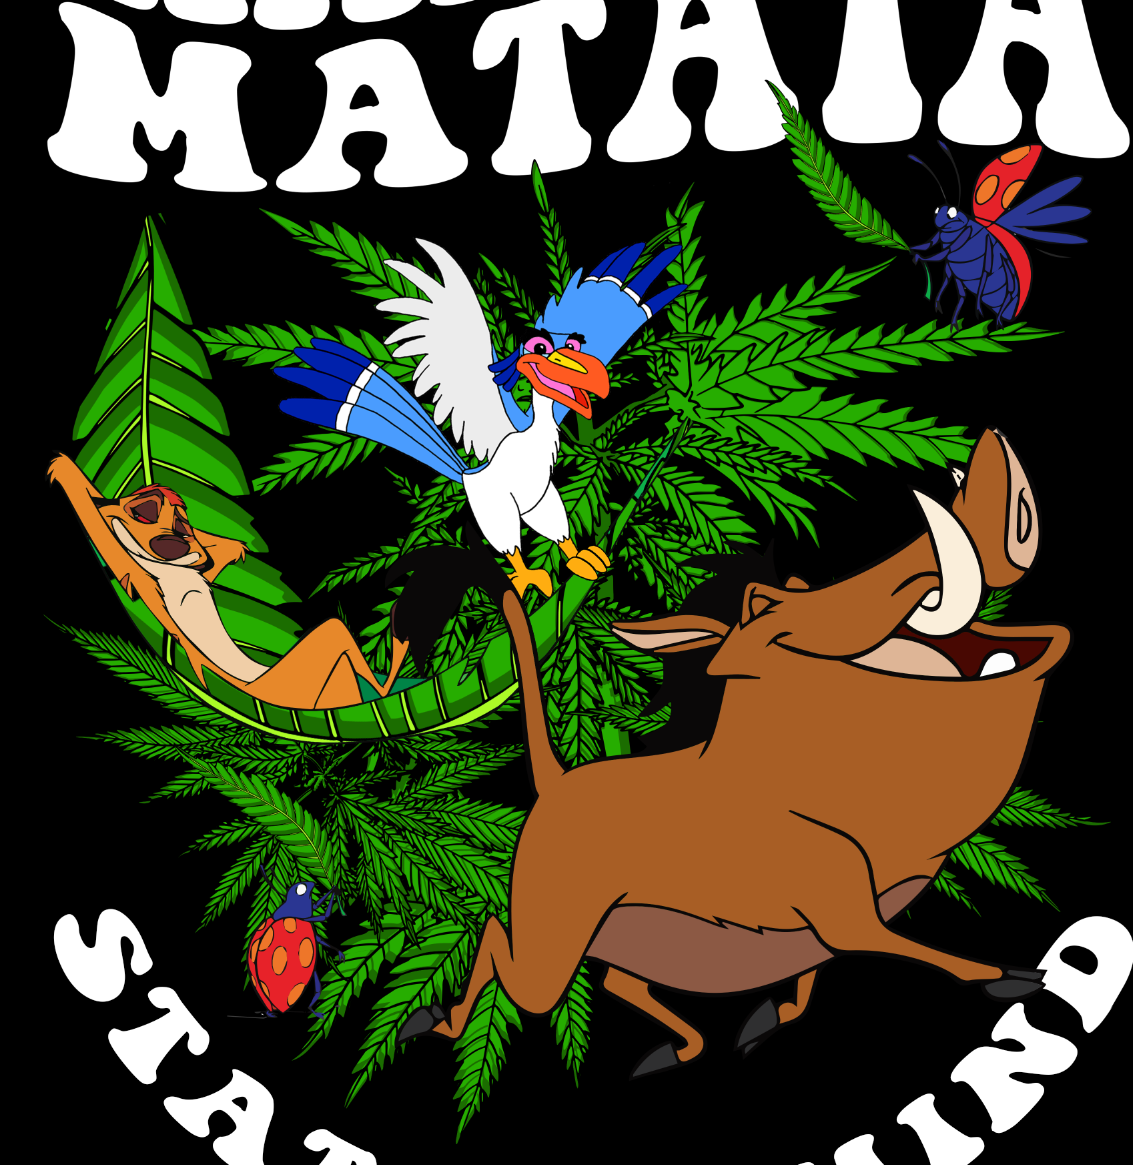 StonerDays Hakuna Matata Long Sleeve shirt with vibrant cannabis leaf and cartoon characters design